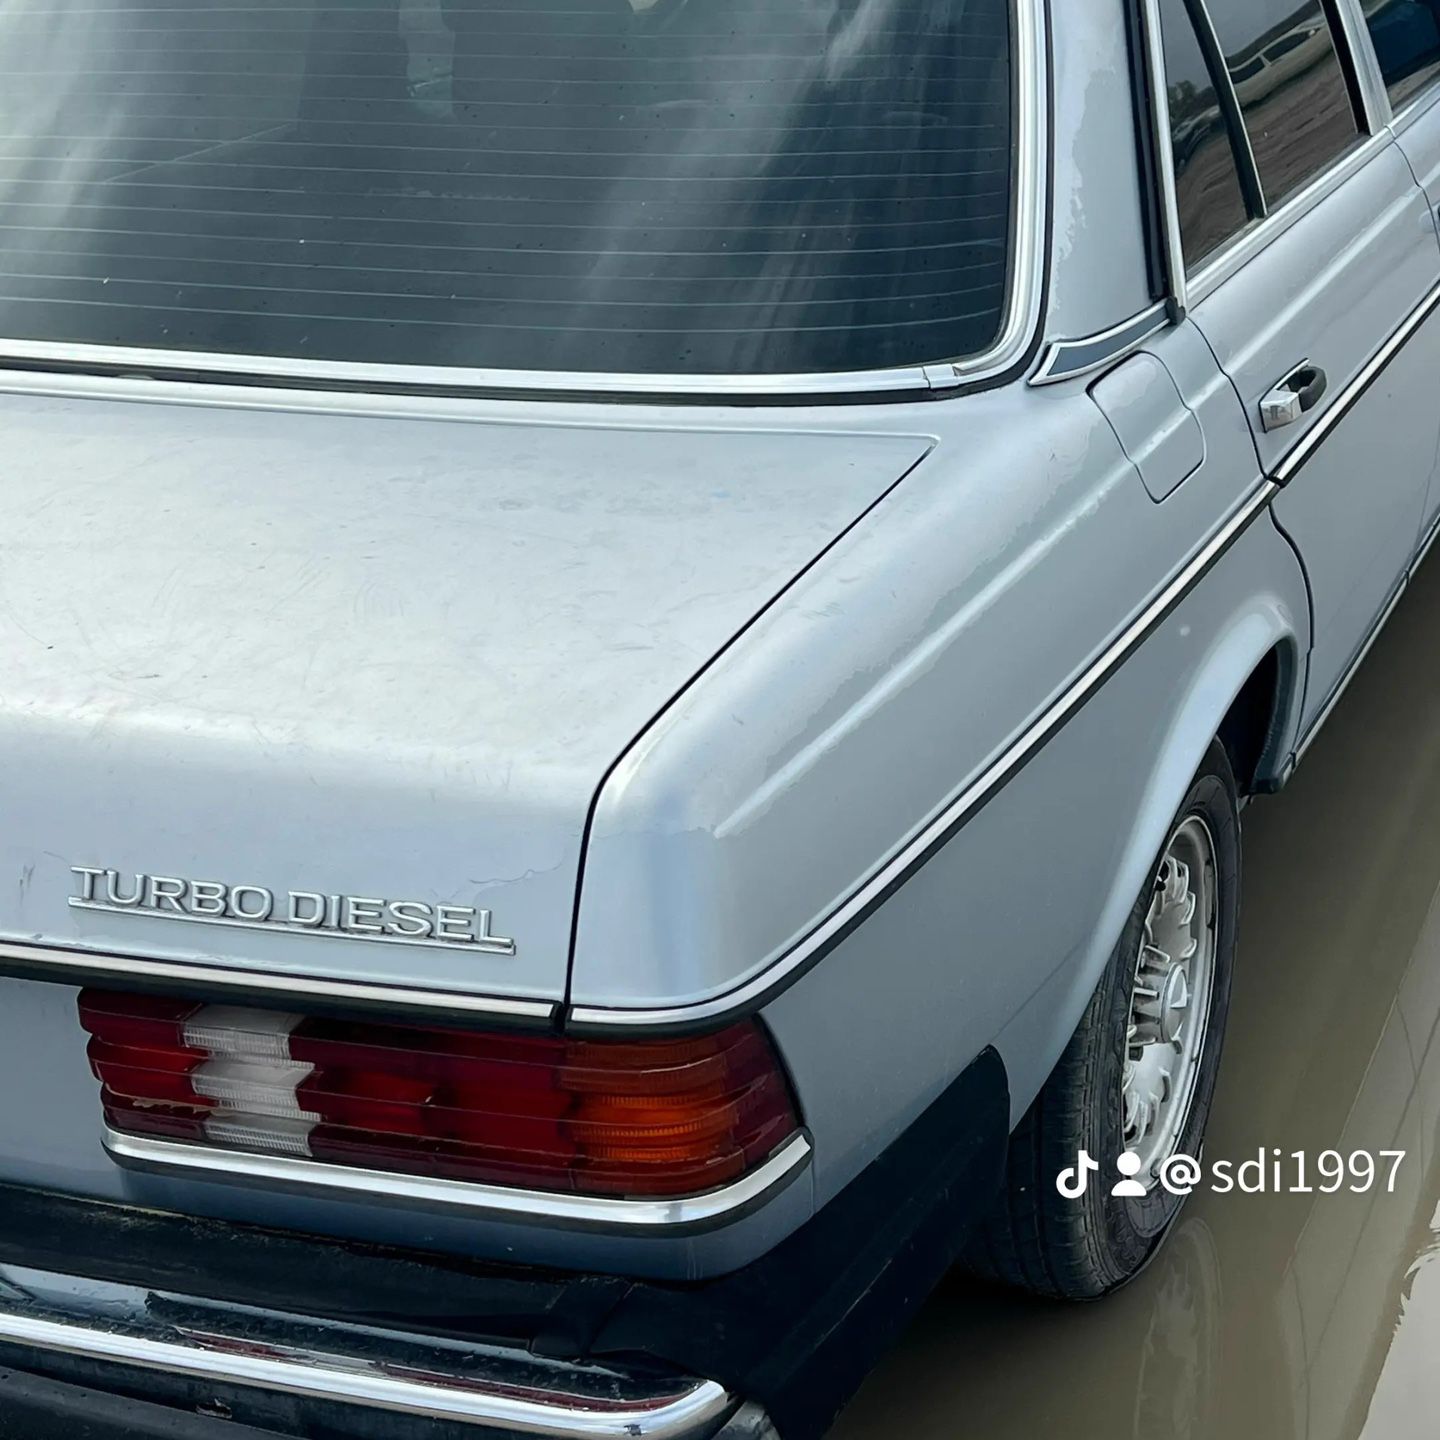 1985 Mercedes-Benz 300